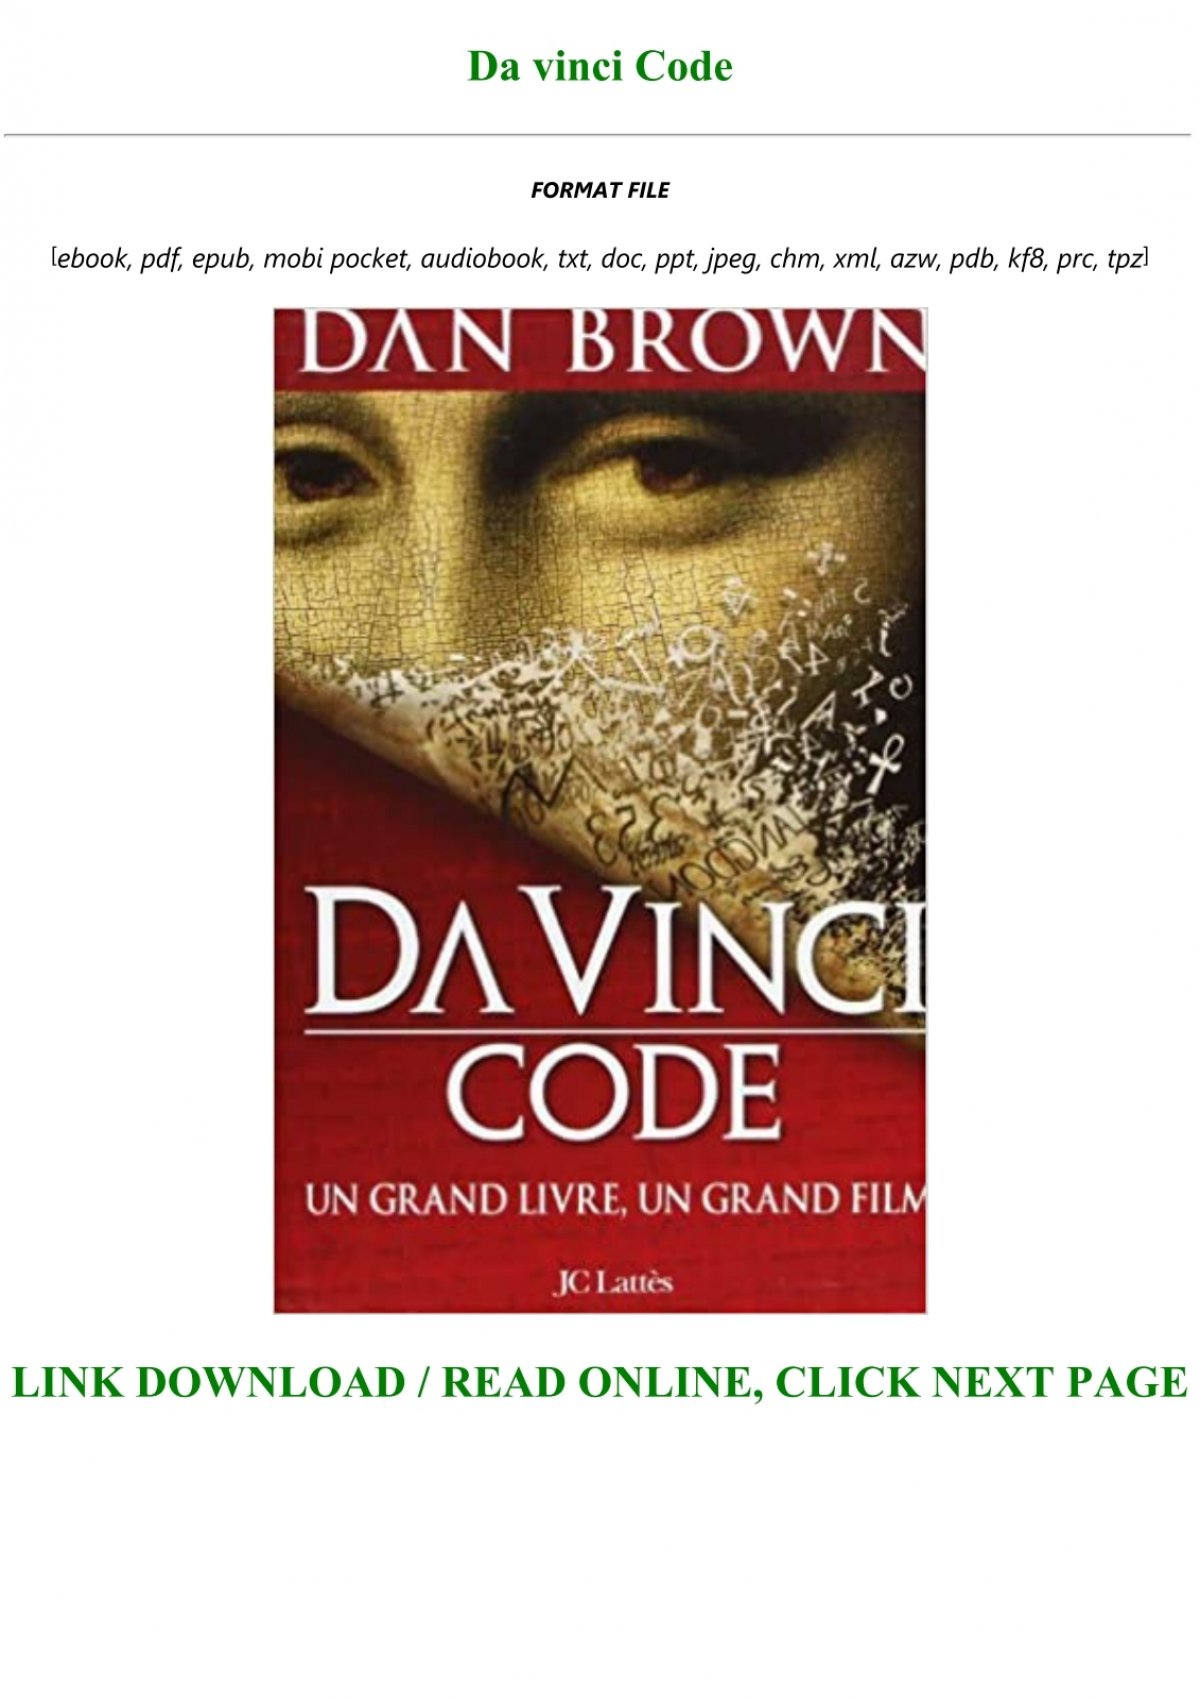 da vinci code illustrated ebook free download